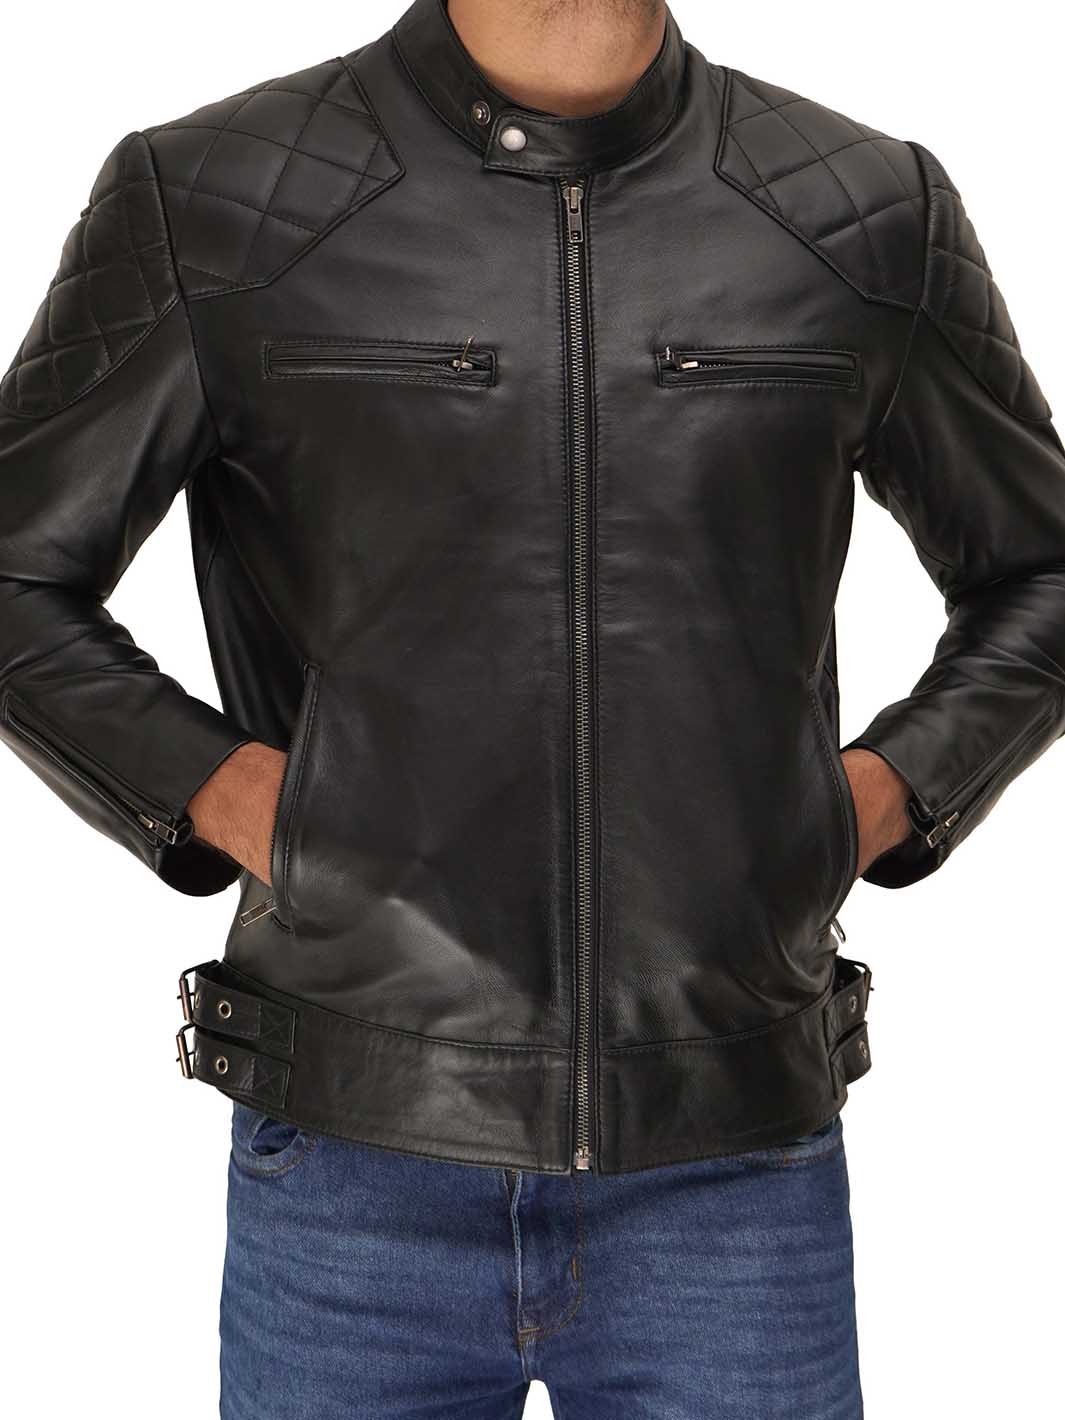 David Beckham Leather Jacket Black Decrum